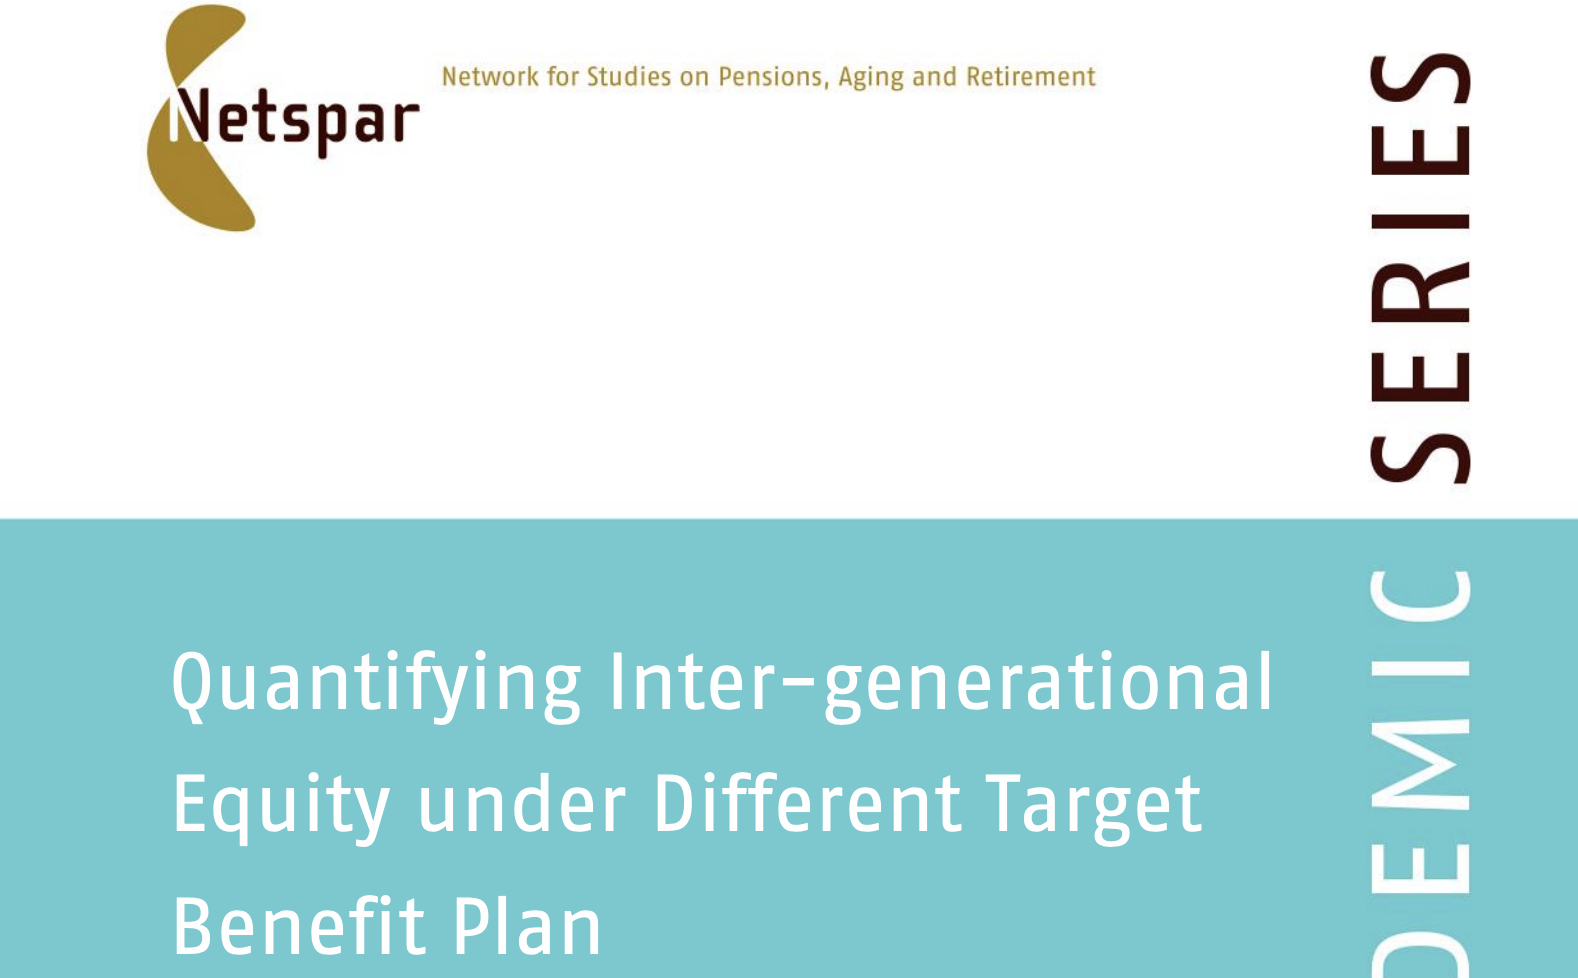 Quantifying Inter-generational Equity under Different Target Benefit Plan Designs